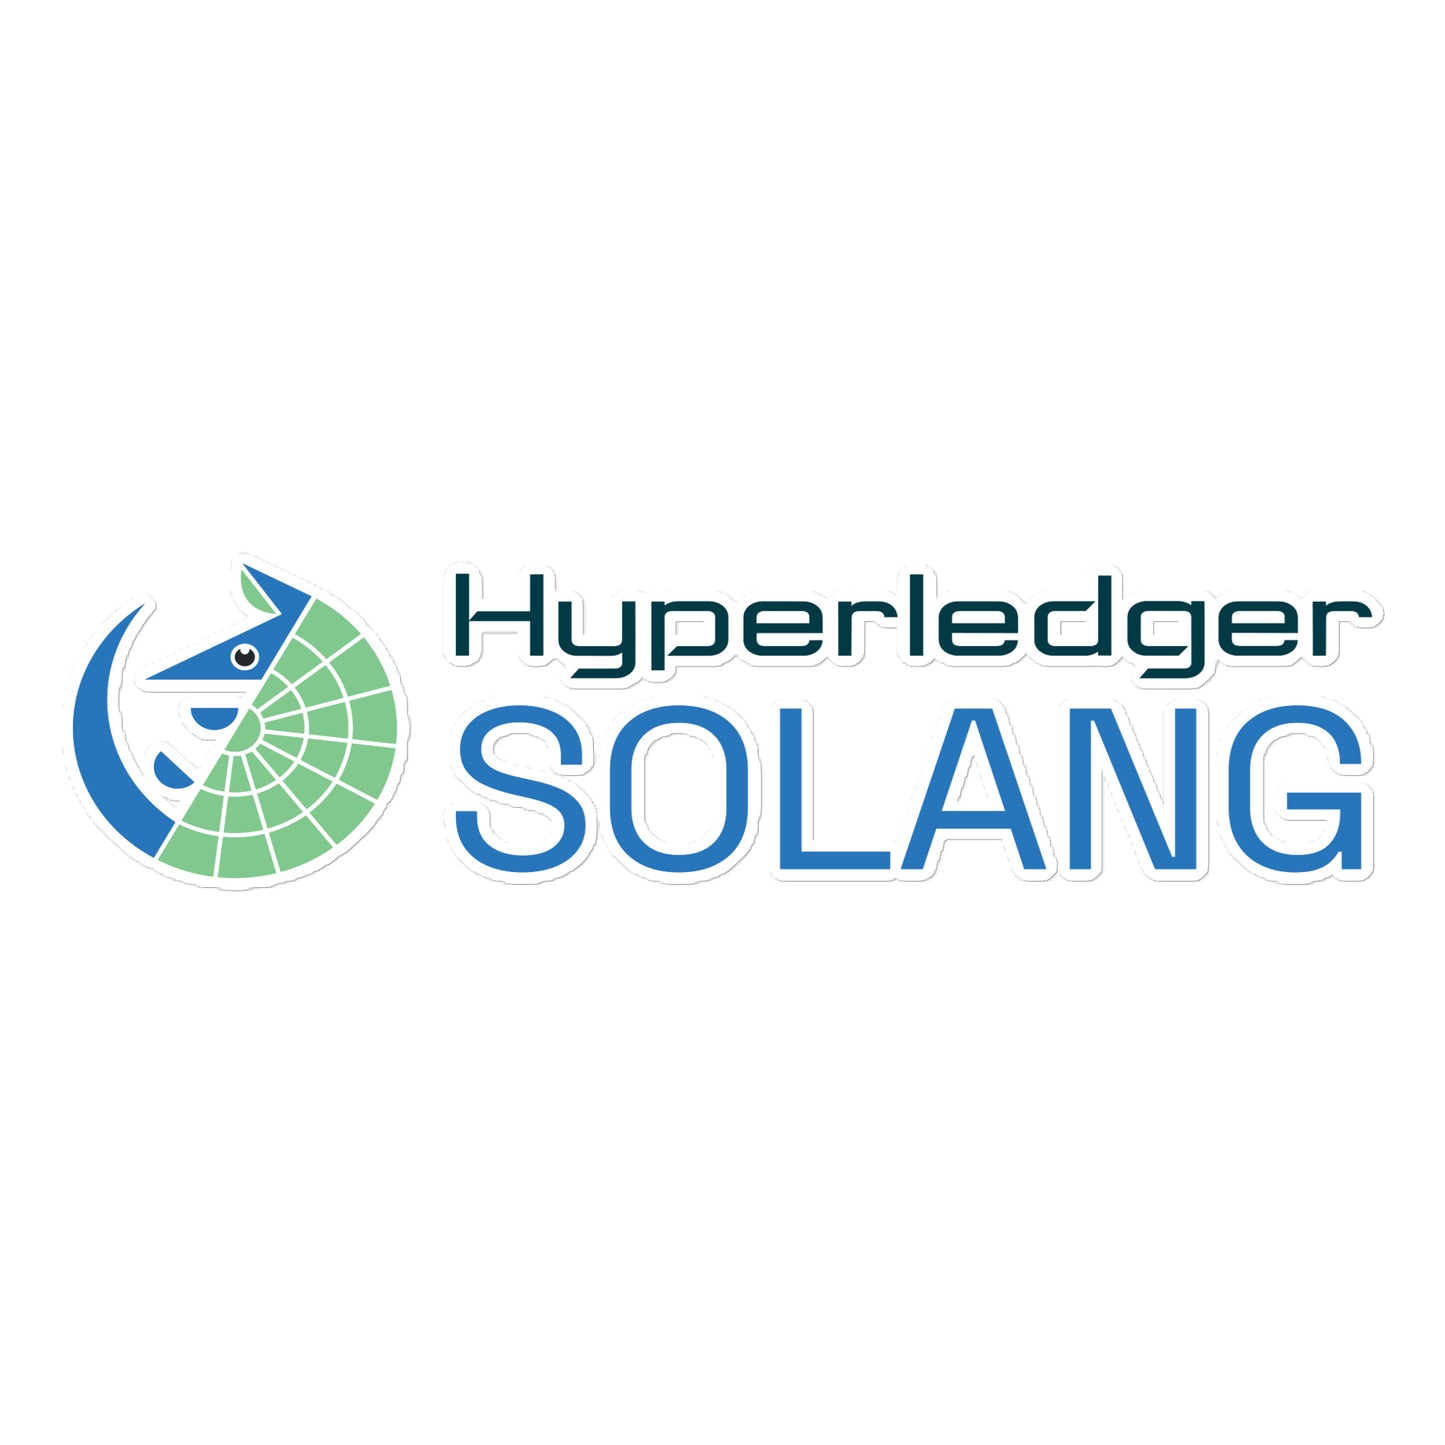 Hyperledger Solang